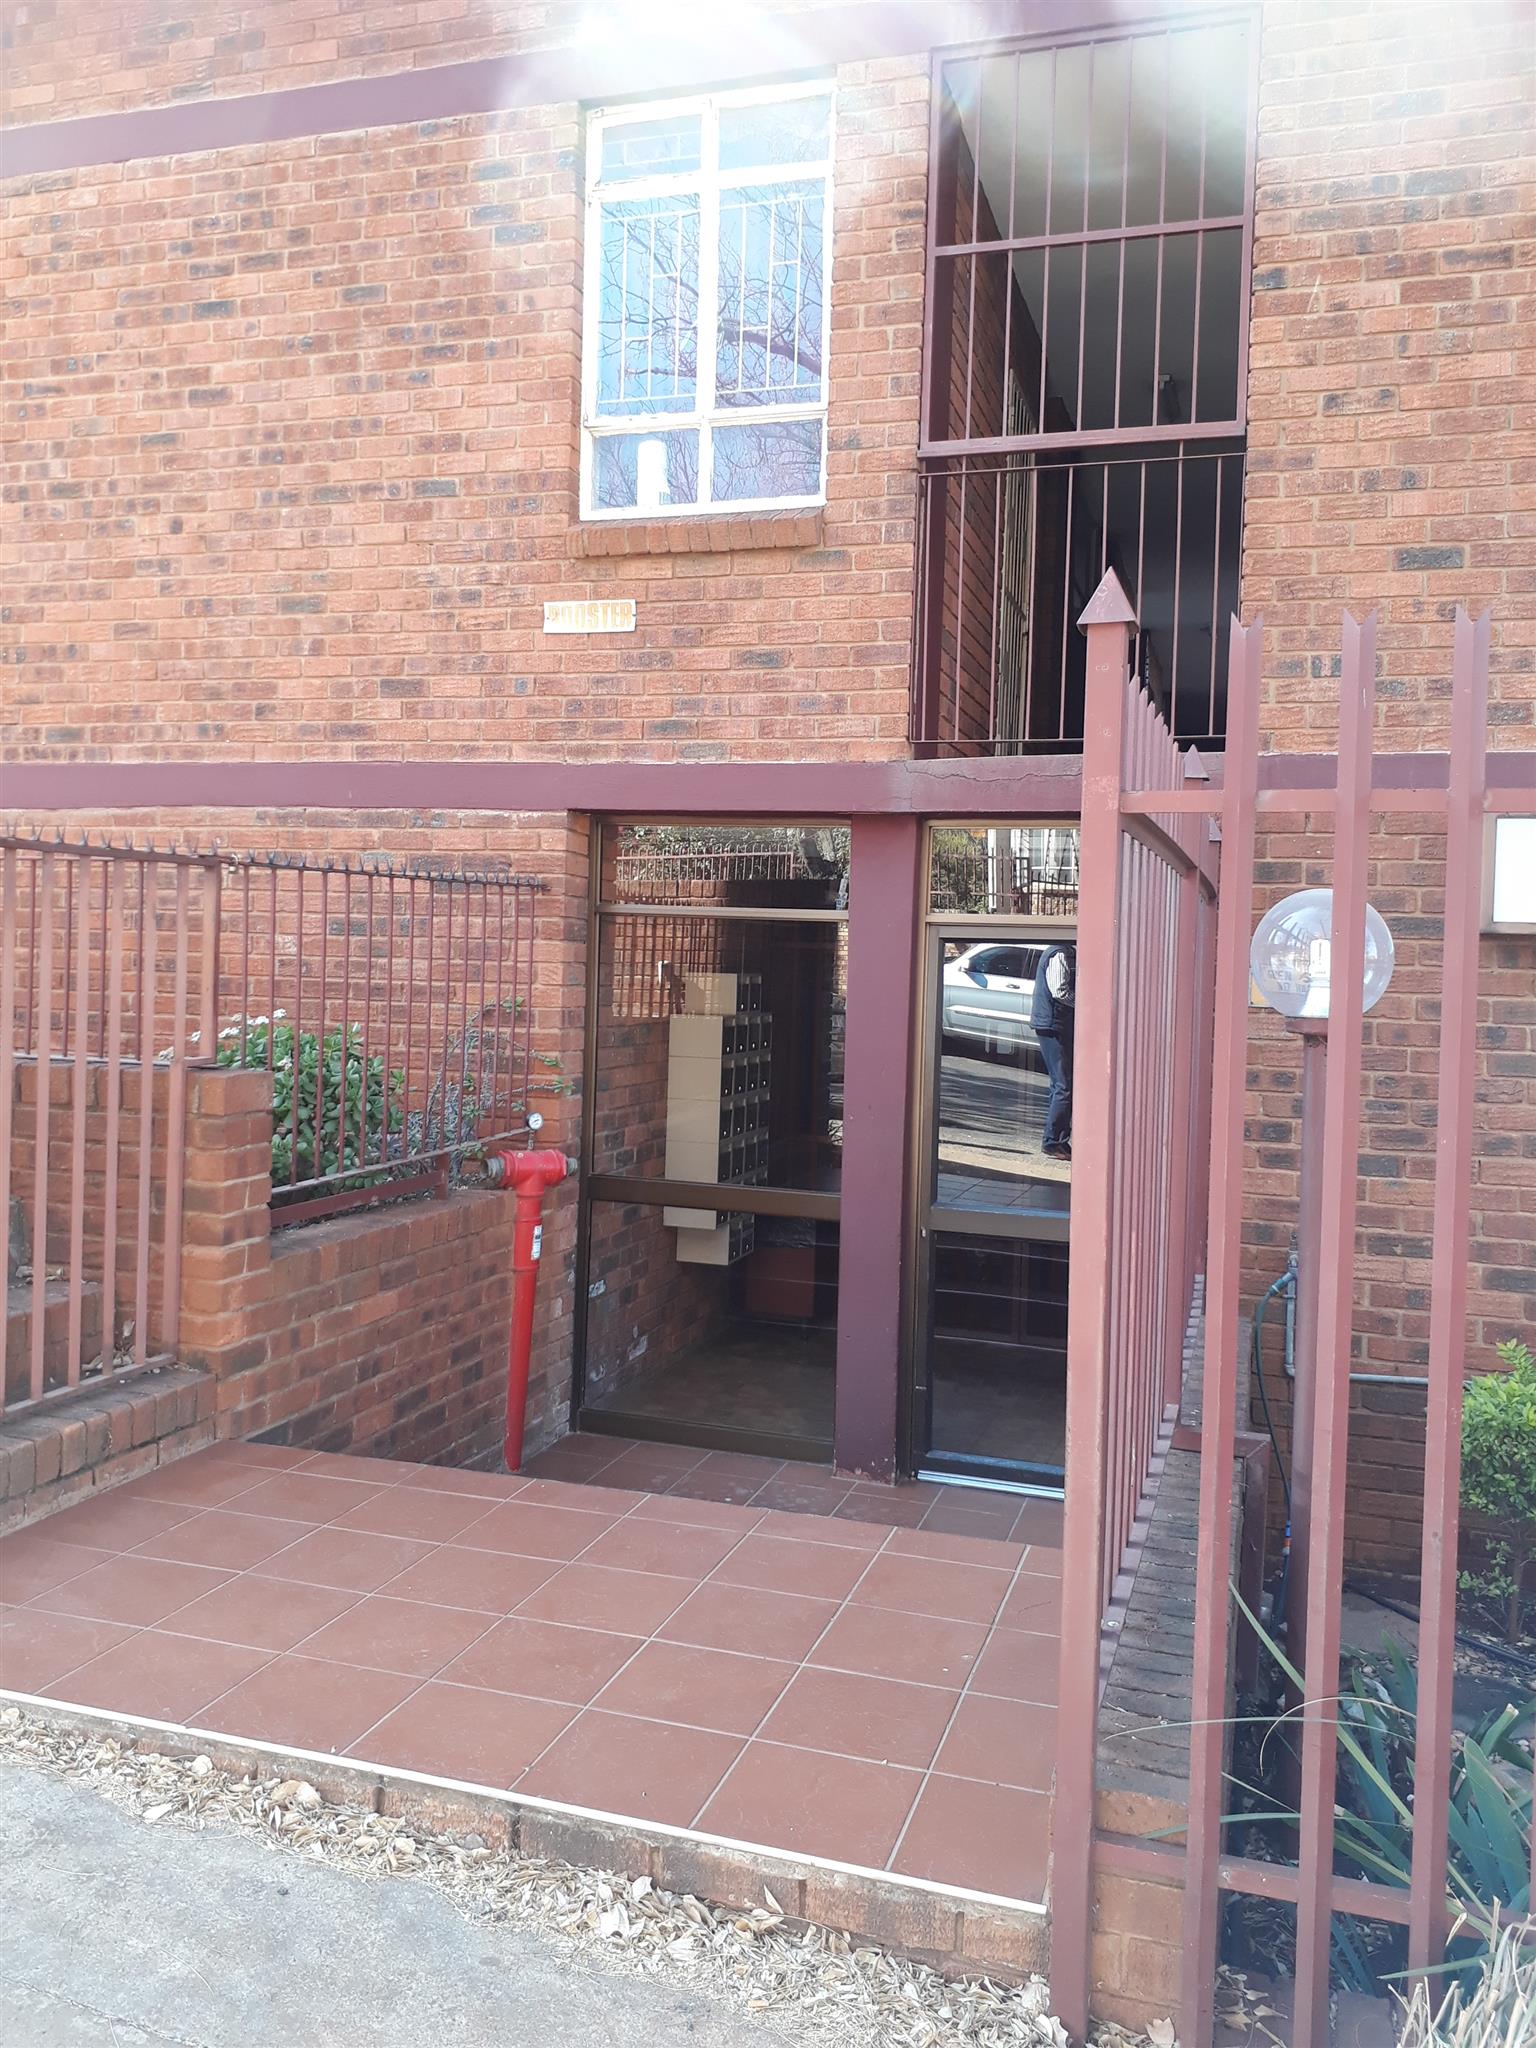 Cozy apartment to rent in Wonderboom South, Pretoria